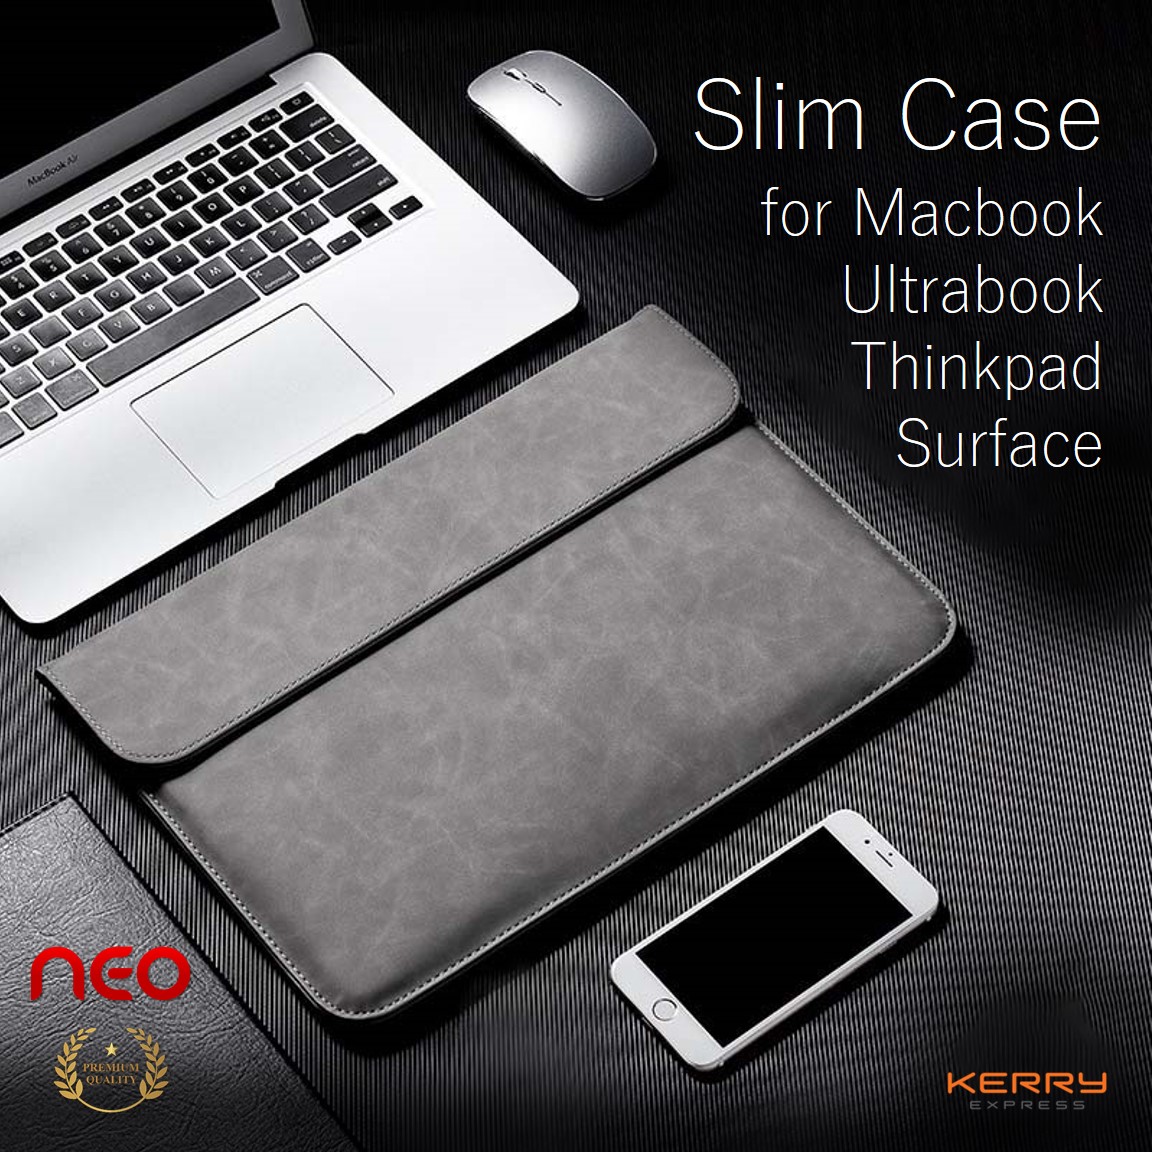 NEO เคสMacbook Ultrabook ดีไซน์เรียบหรู บางเบา  13.3 ,15.4 นิ้ว เคสโน็ตบุ๊ค เคสแล็ปท็อป กันรอยกันกระแทก Ultra Slim Case for Laptop Macbook Air Pro SurFace Thinkpad 13.3 ,15.4 inch